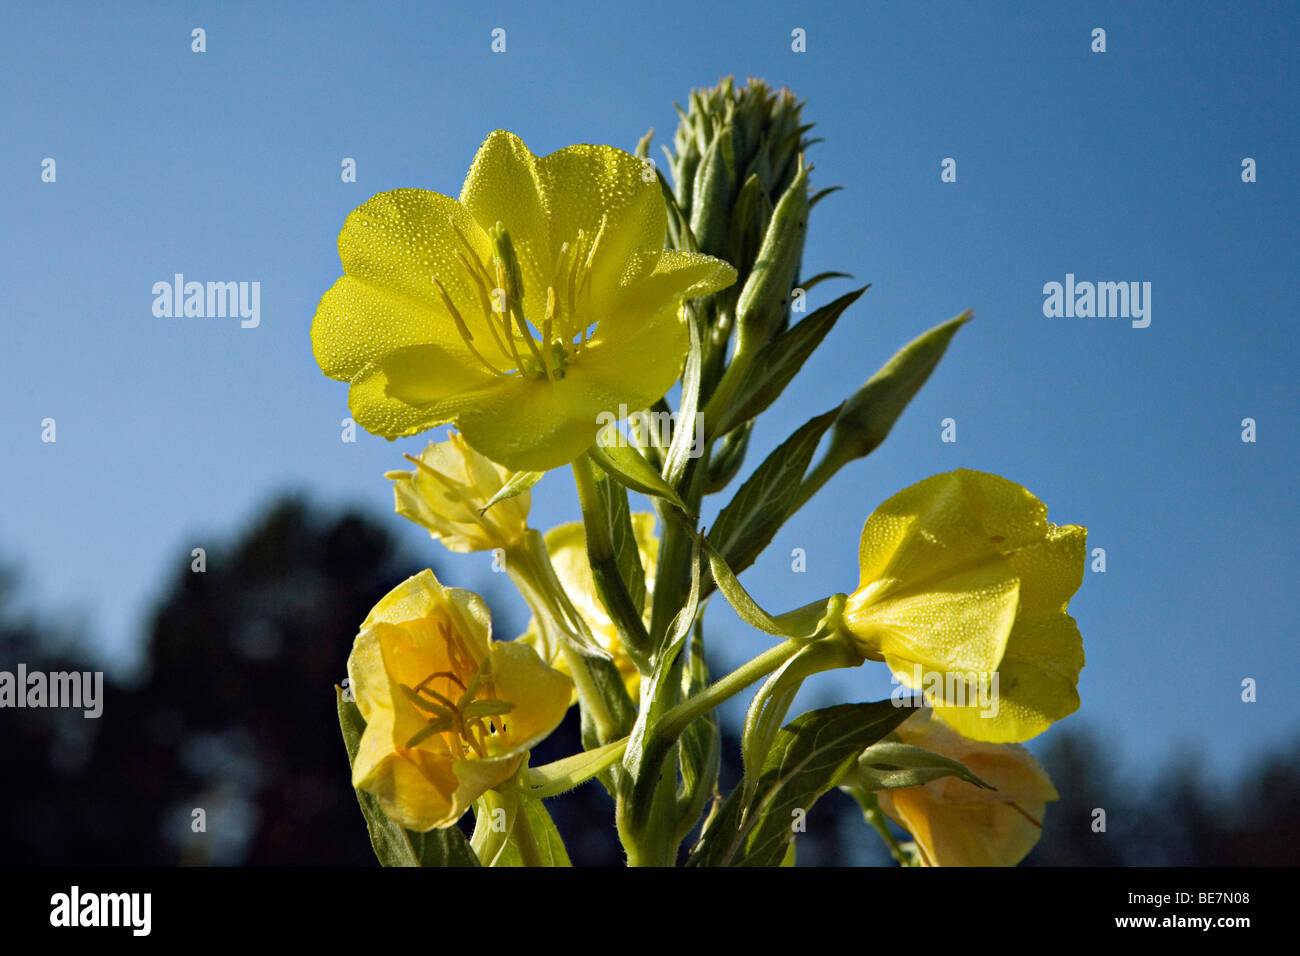 Oenothera biennis Evening primrose or Evening star flower in close-up Stock Photo